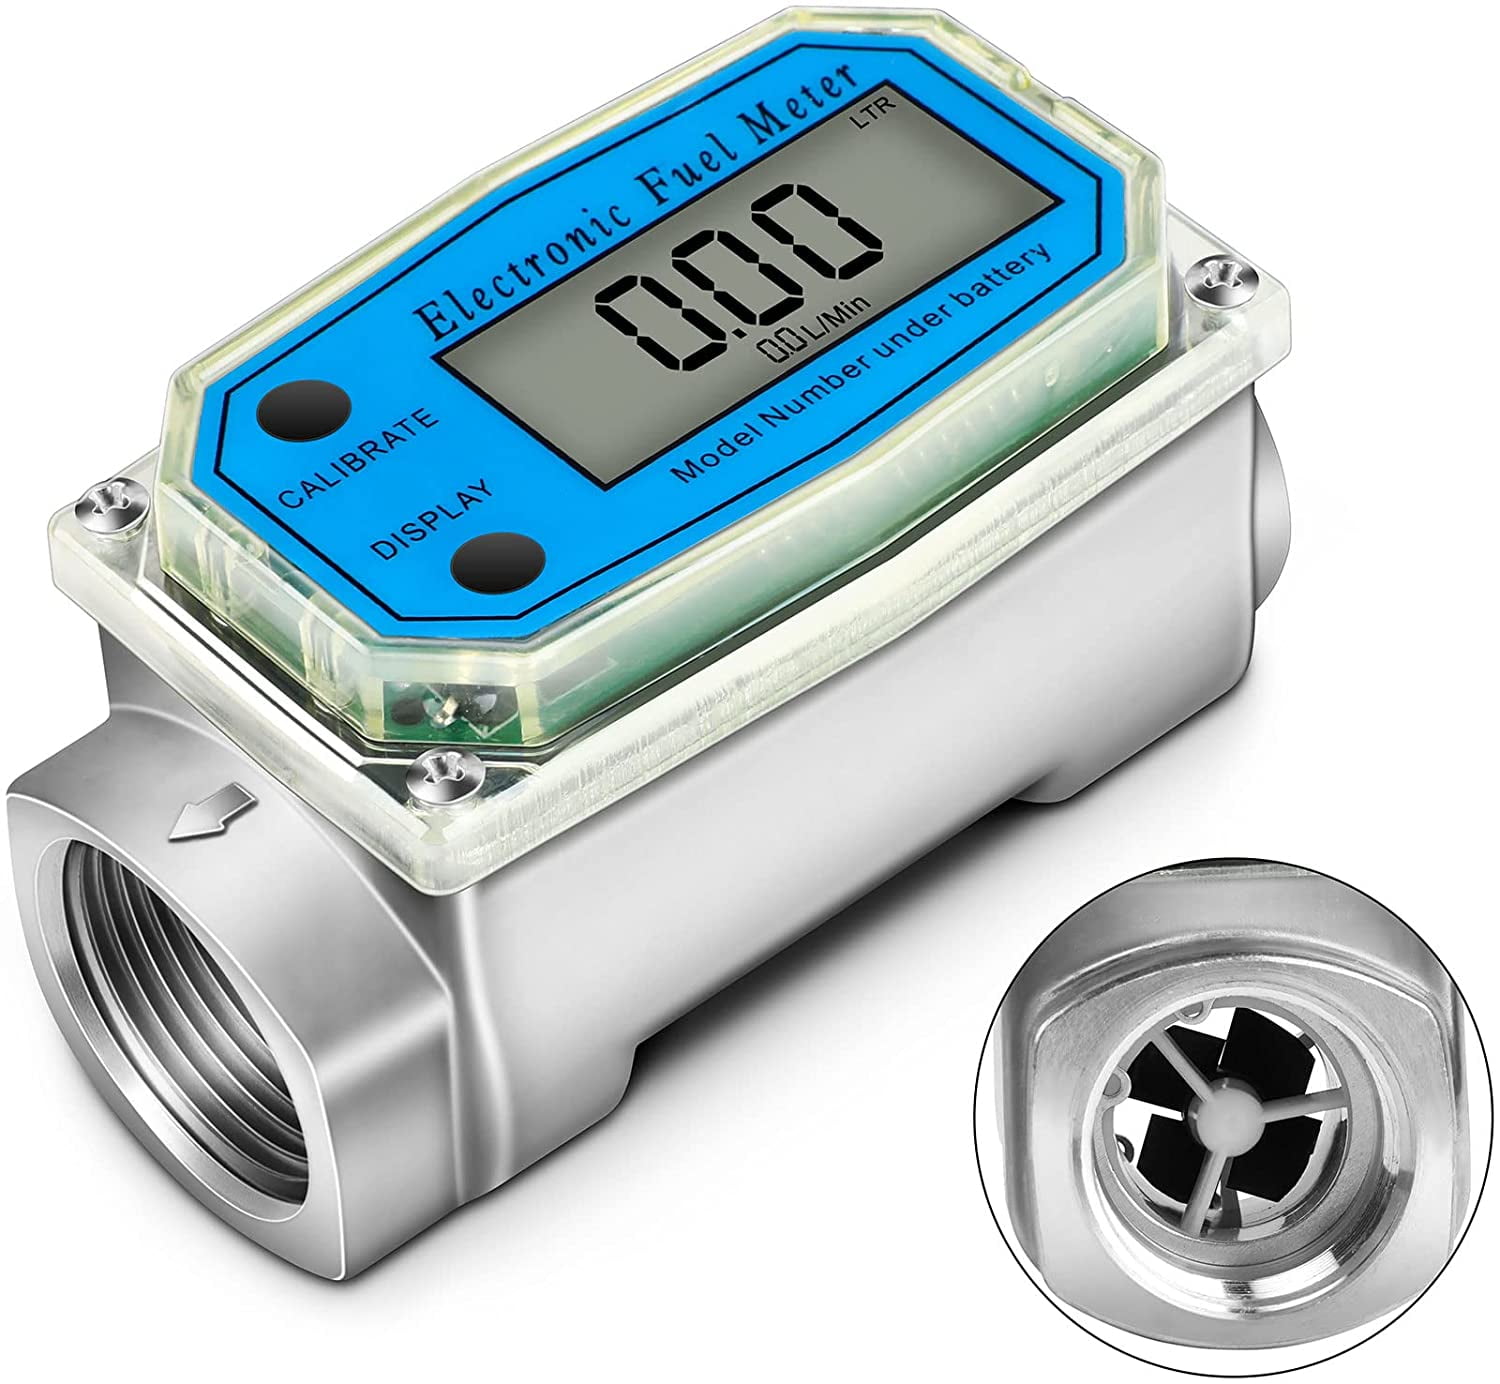 Digital High Accuracy Fuel Flowmeter LCD Display For Gasoline Oil Measure Tool 